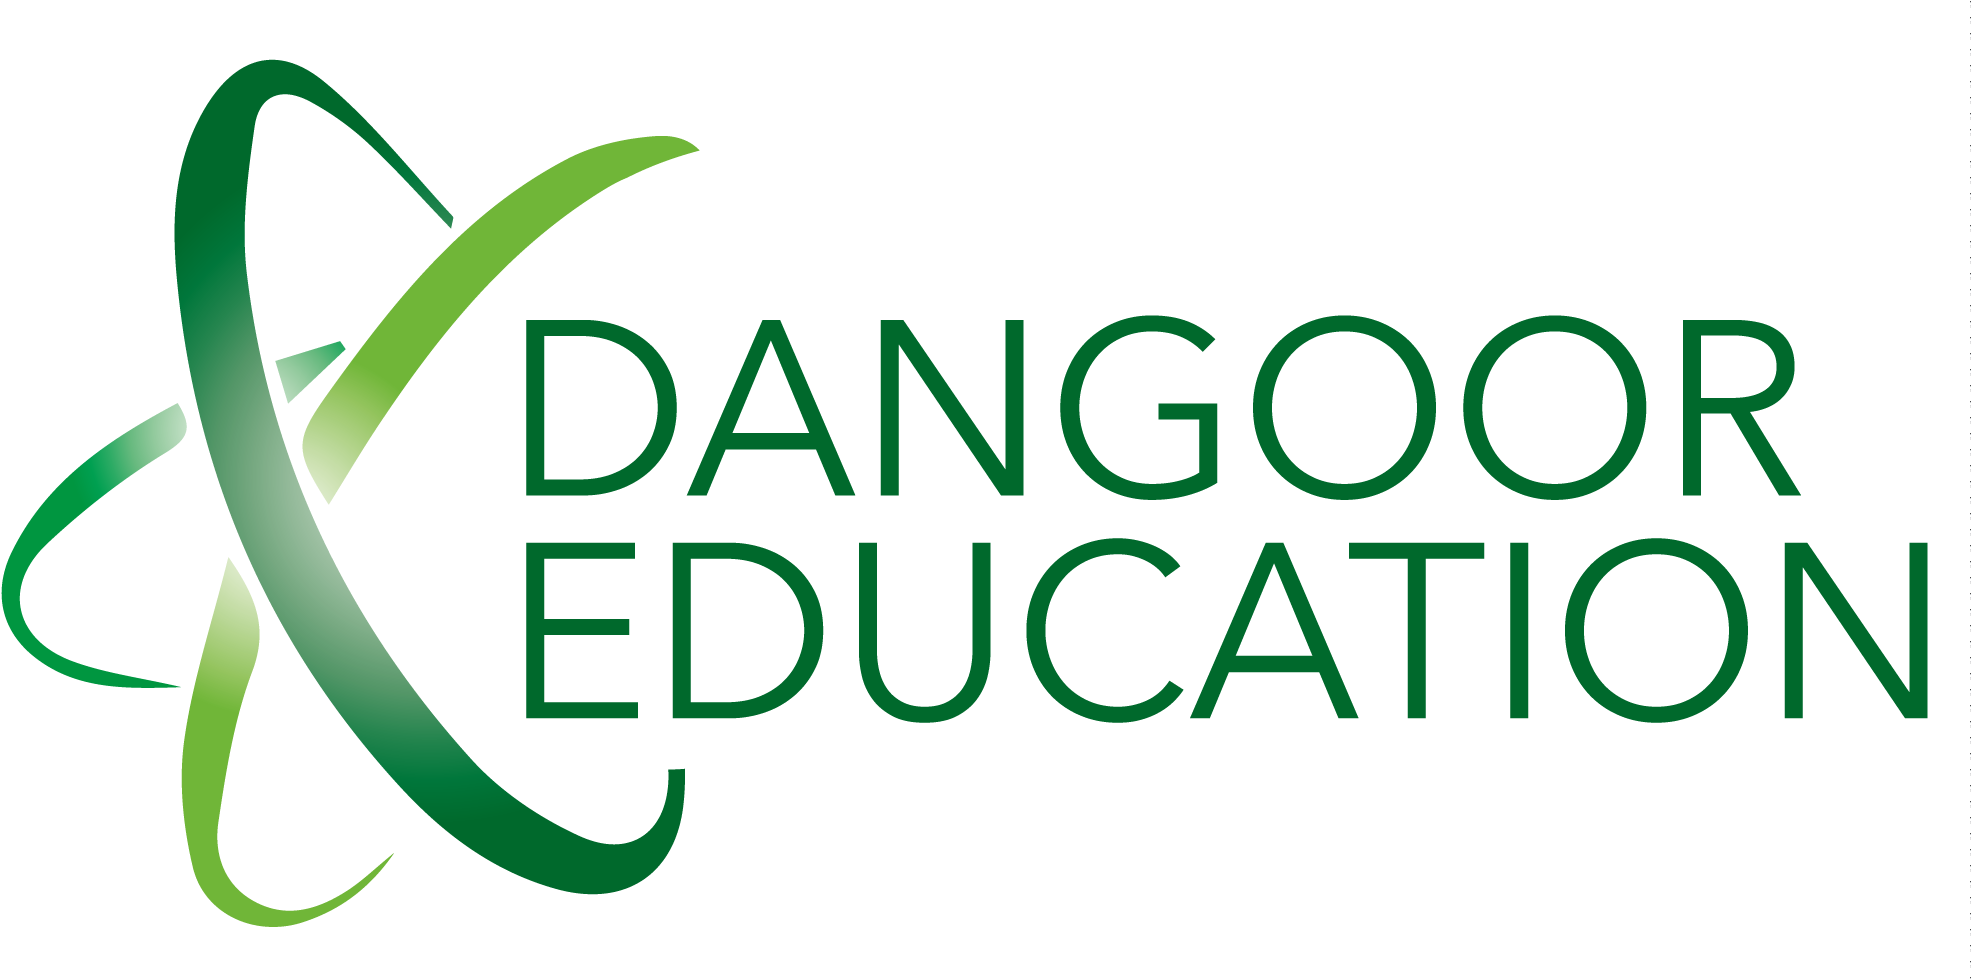 Dangoor Education Logo In Png-final - Jacob Burns Film Center Logo (2000x985), Png Download